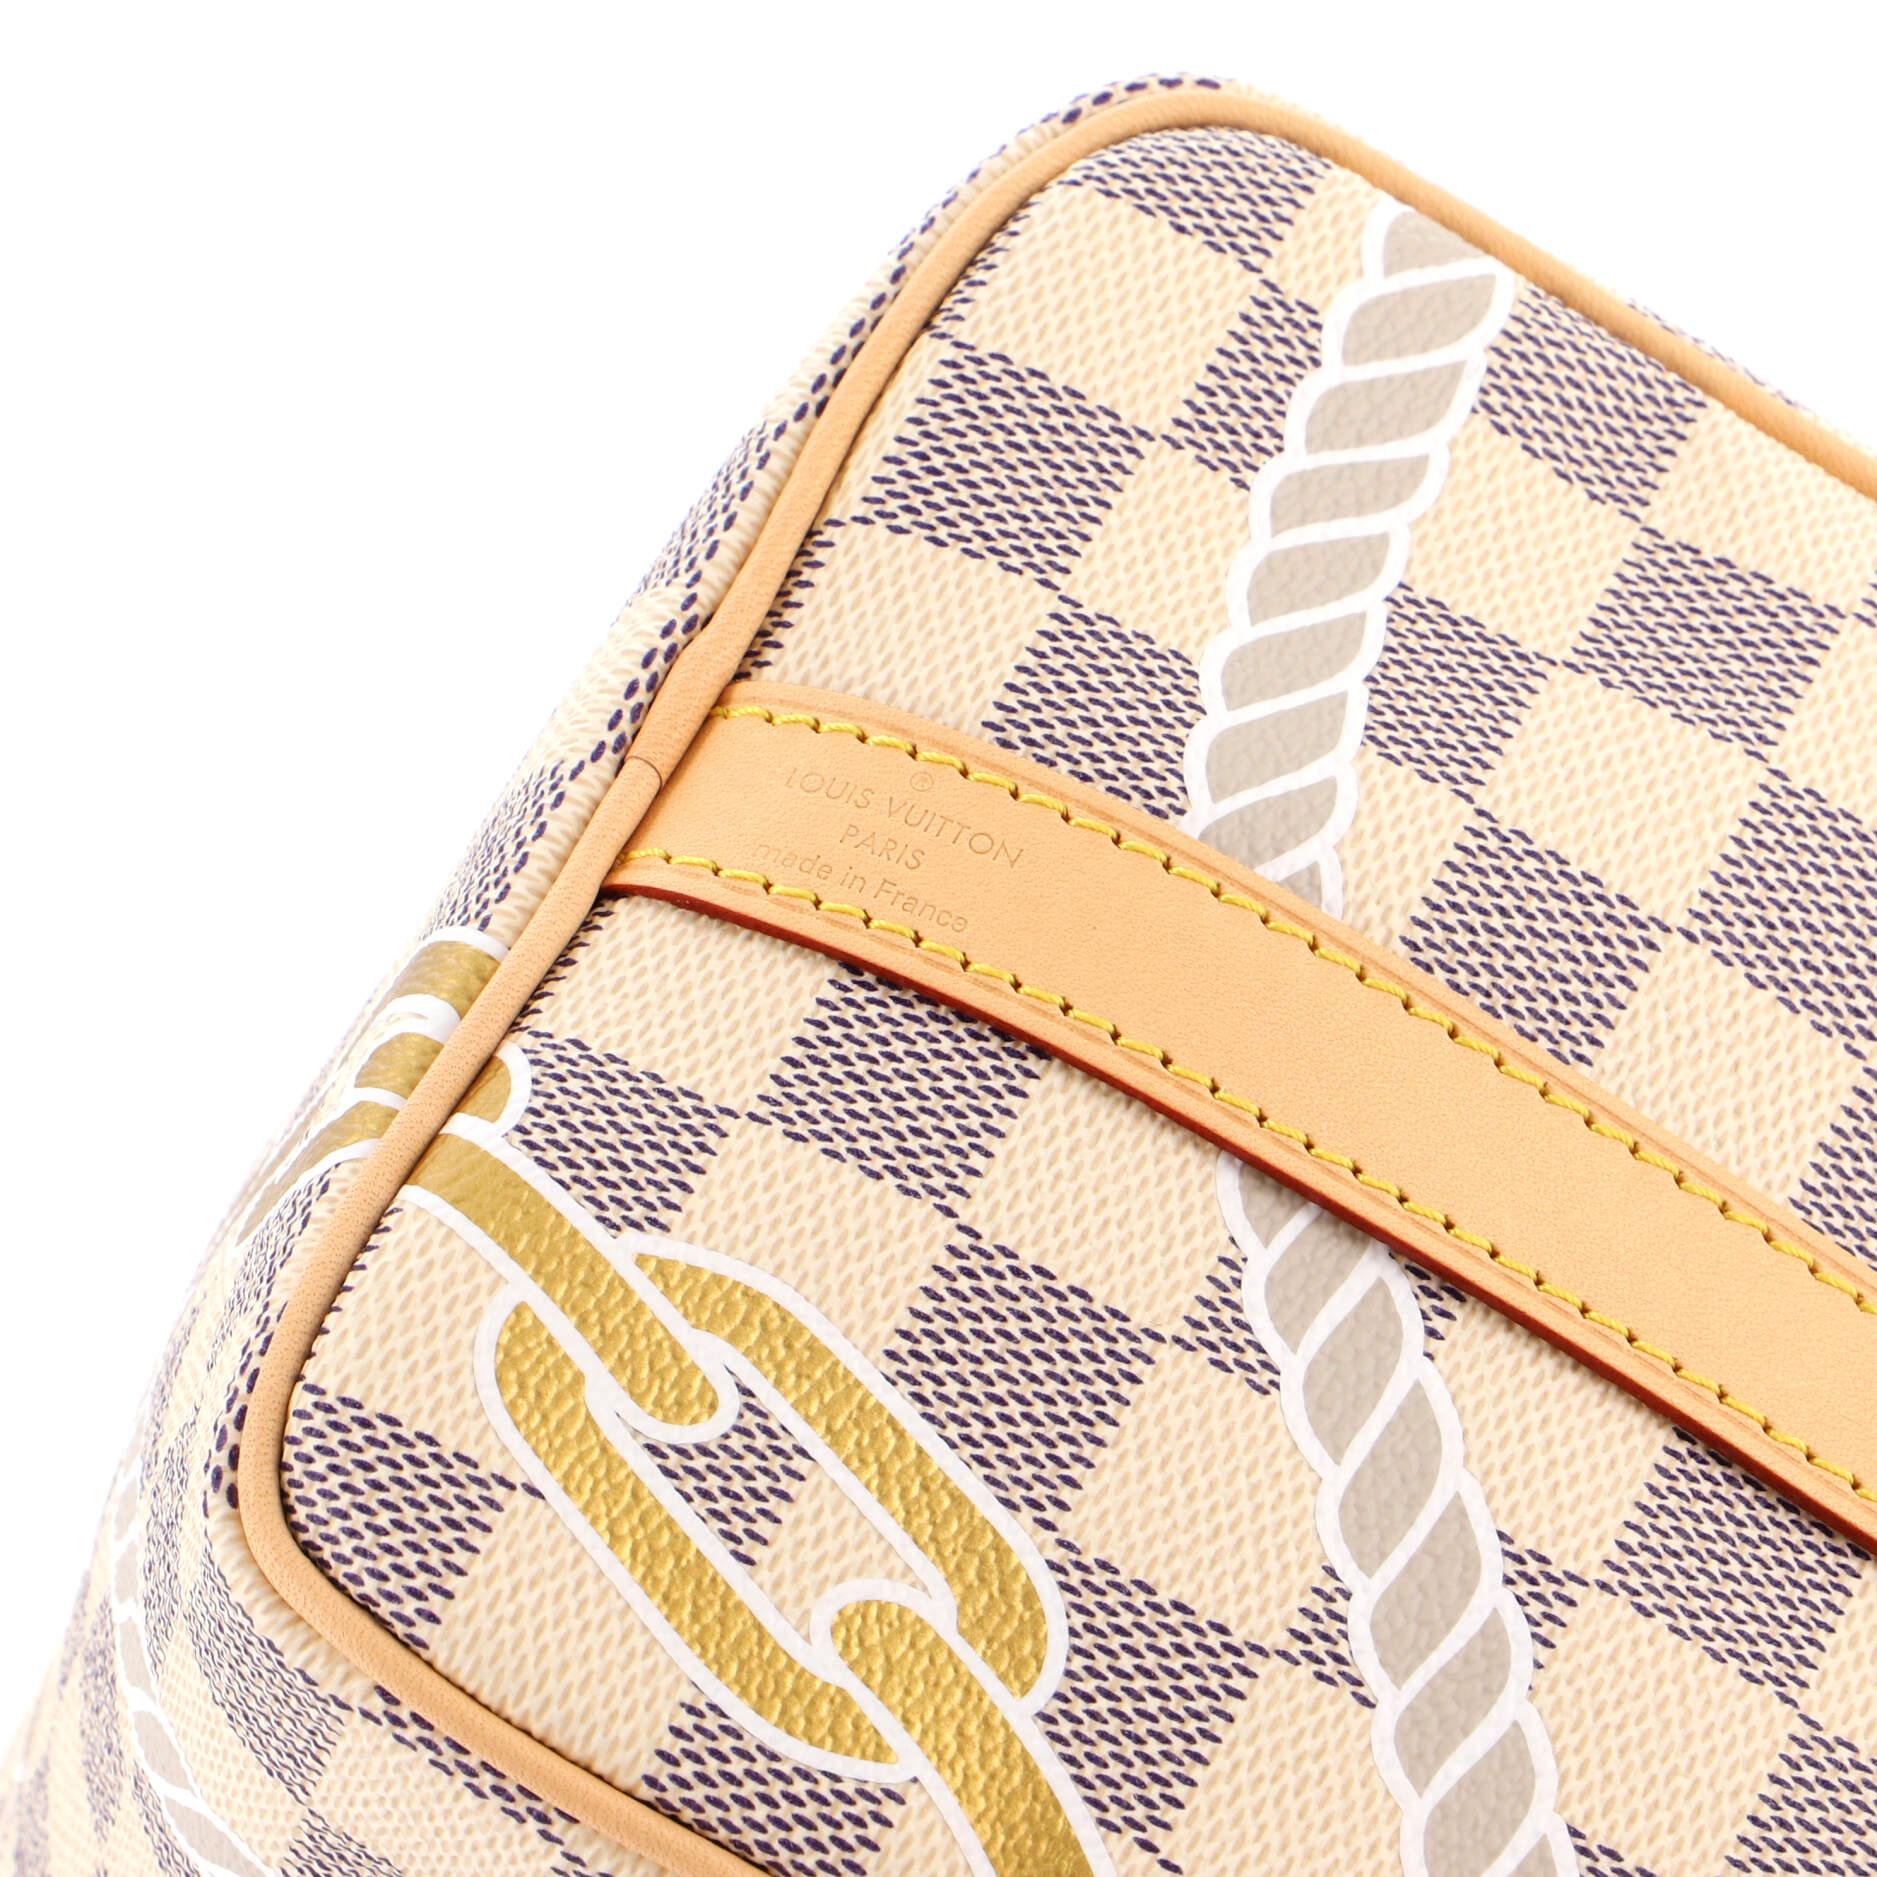 Louis Vuitton Speedy Bandouliere Bag Limited Edition Nautical Damier 25 2